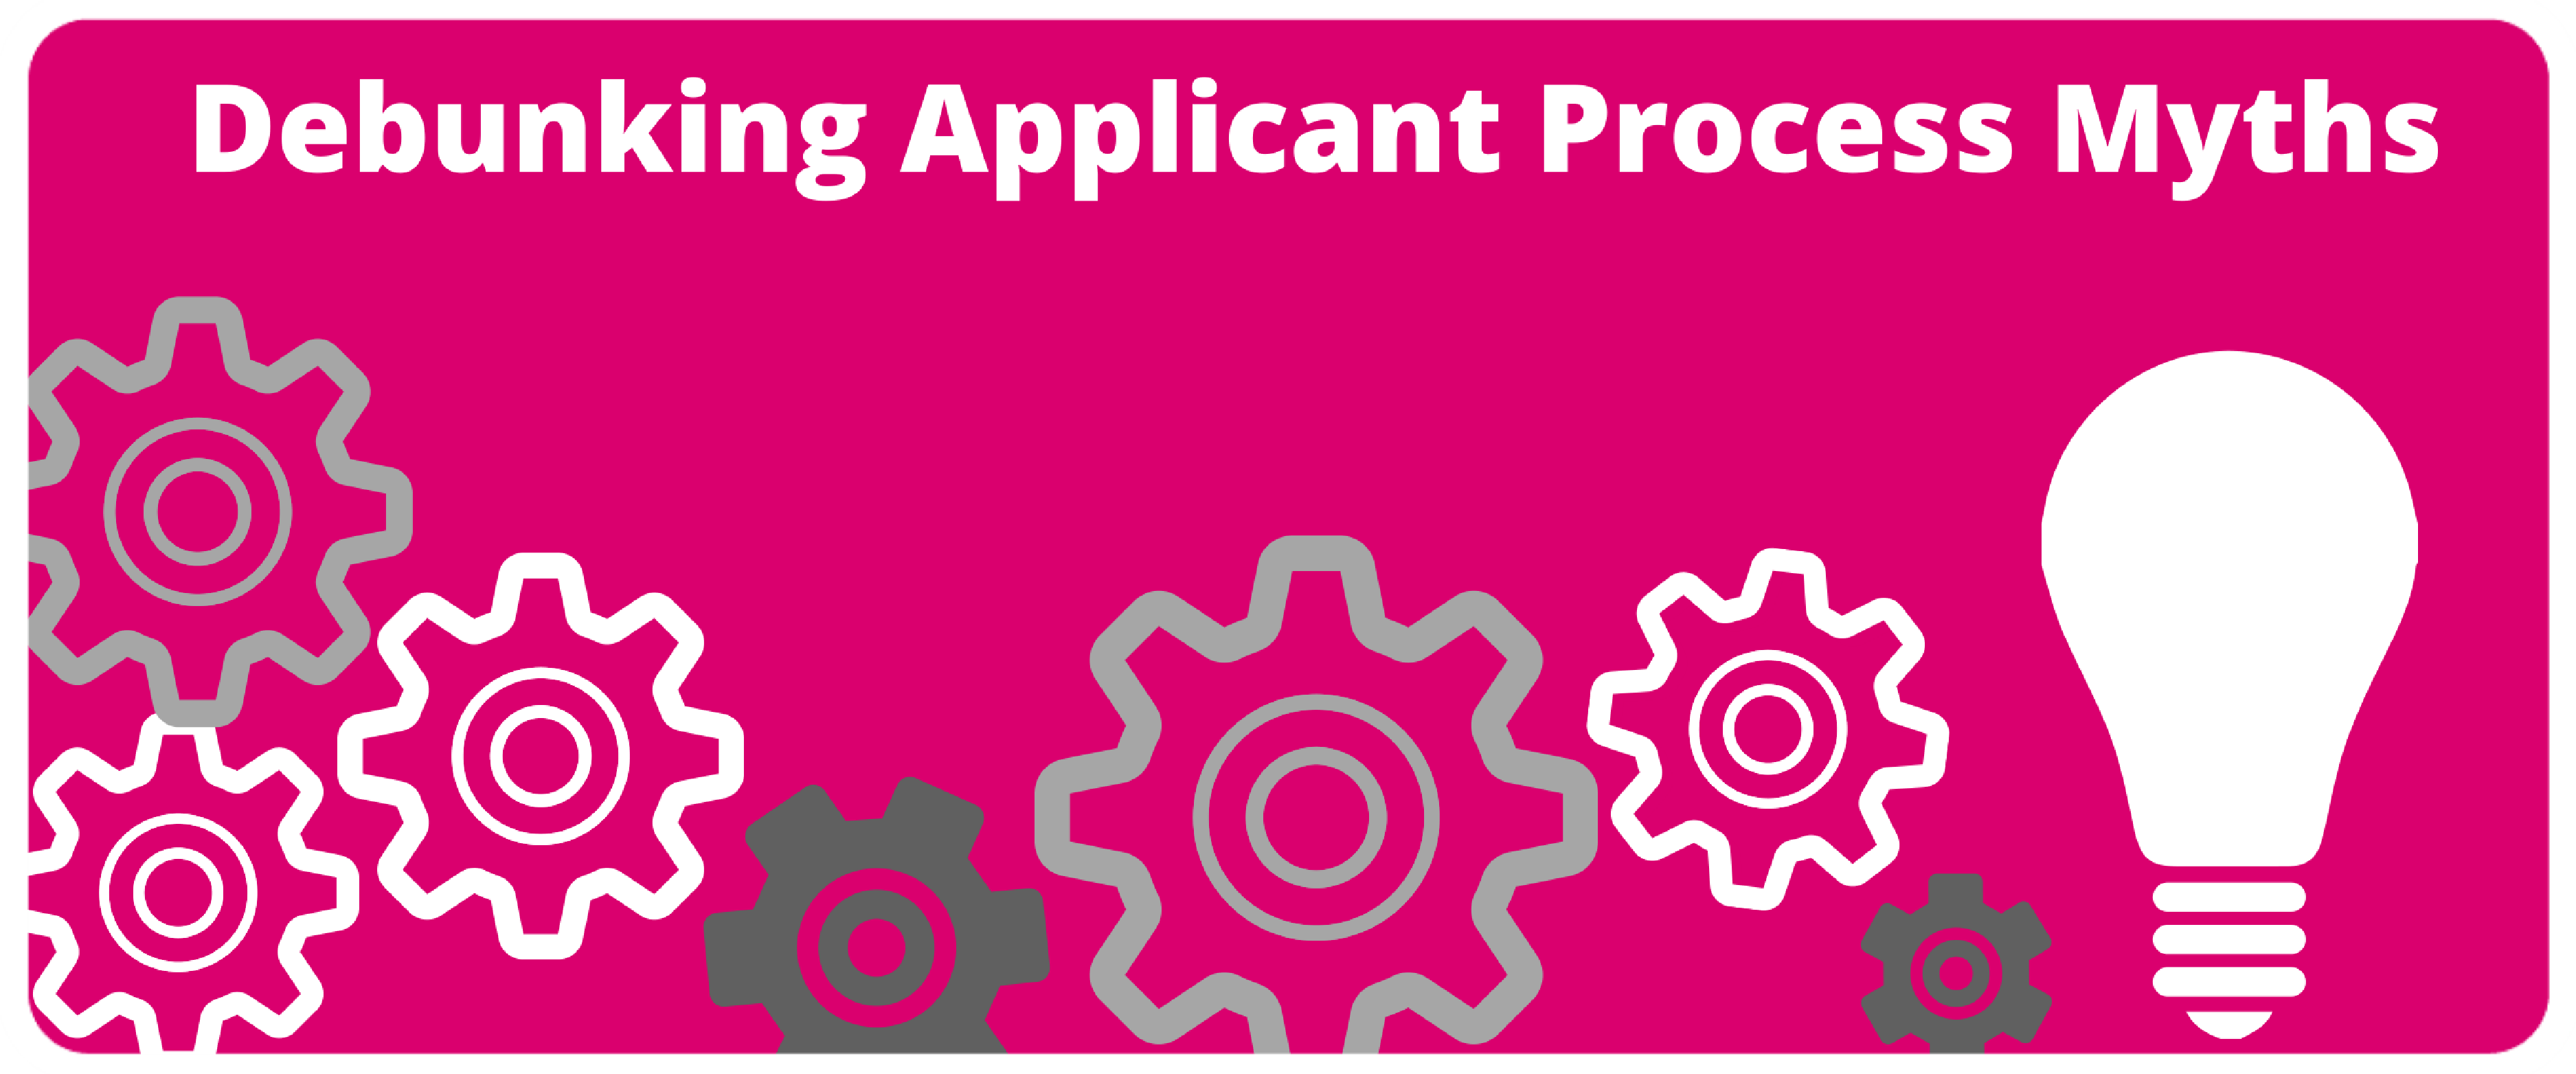 Debunking six myths of application process